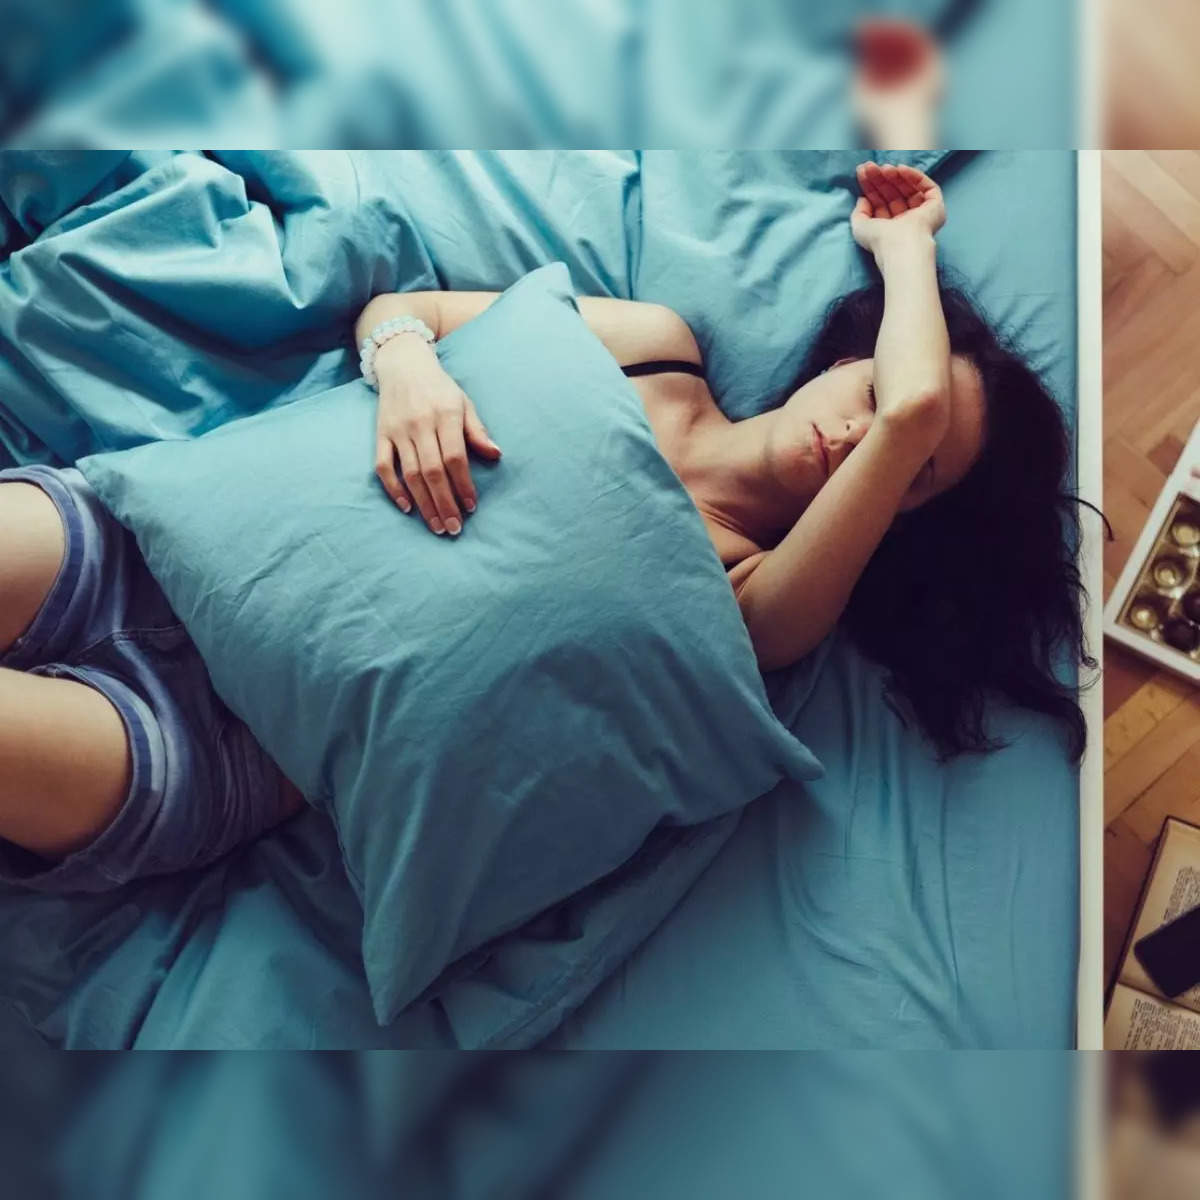 girl sleeping in lingerie in bed woke up, Stock Video